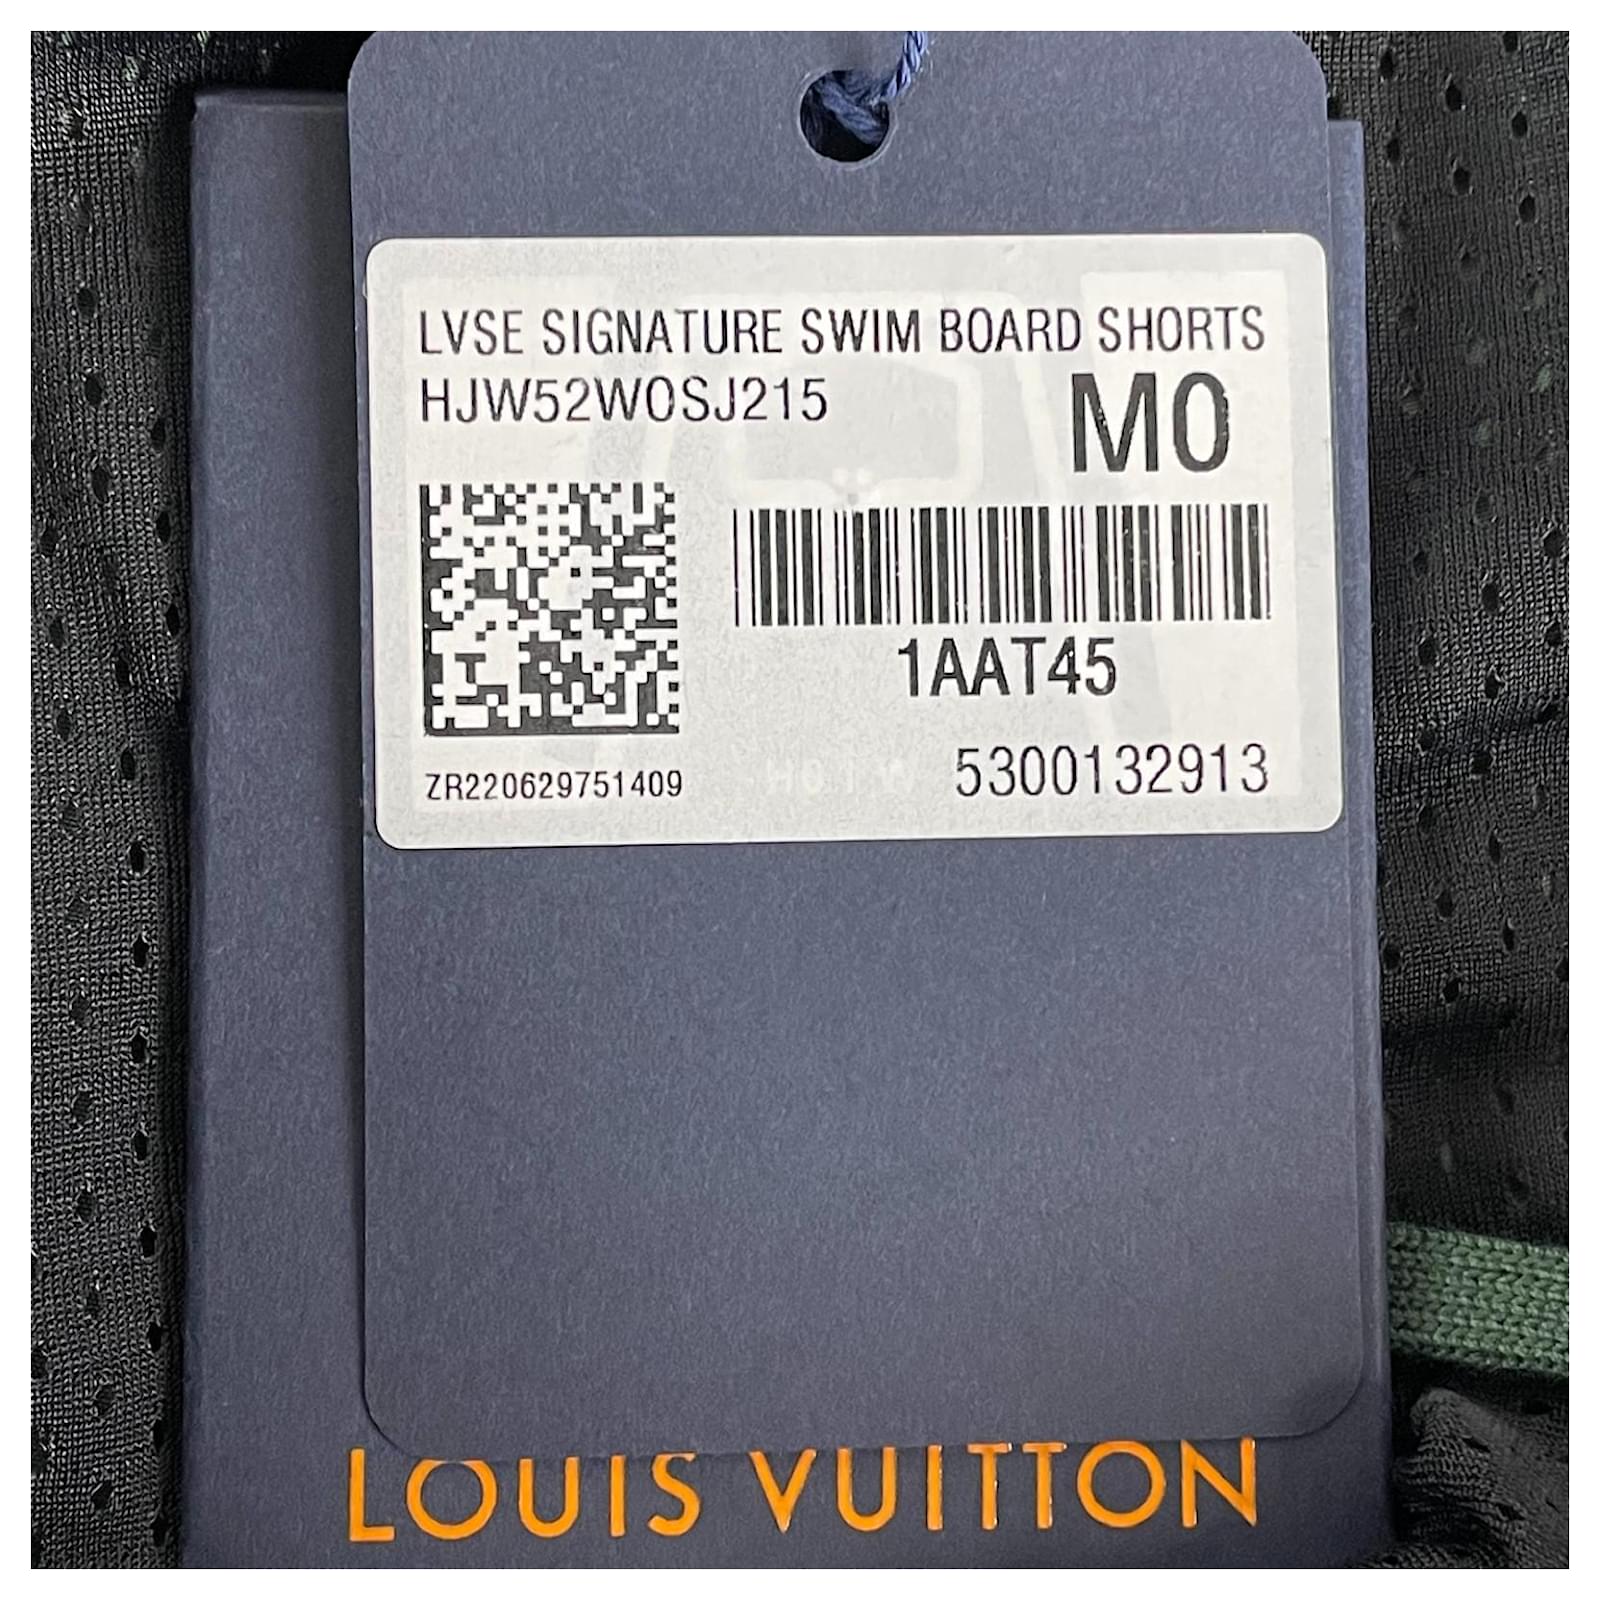 Louis Vuitton LVSE SIGNATURE SWIM BOARD SHORTS